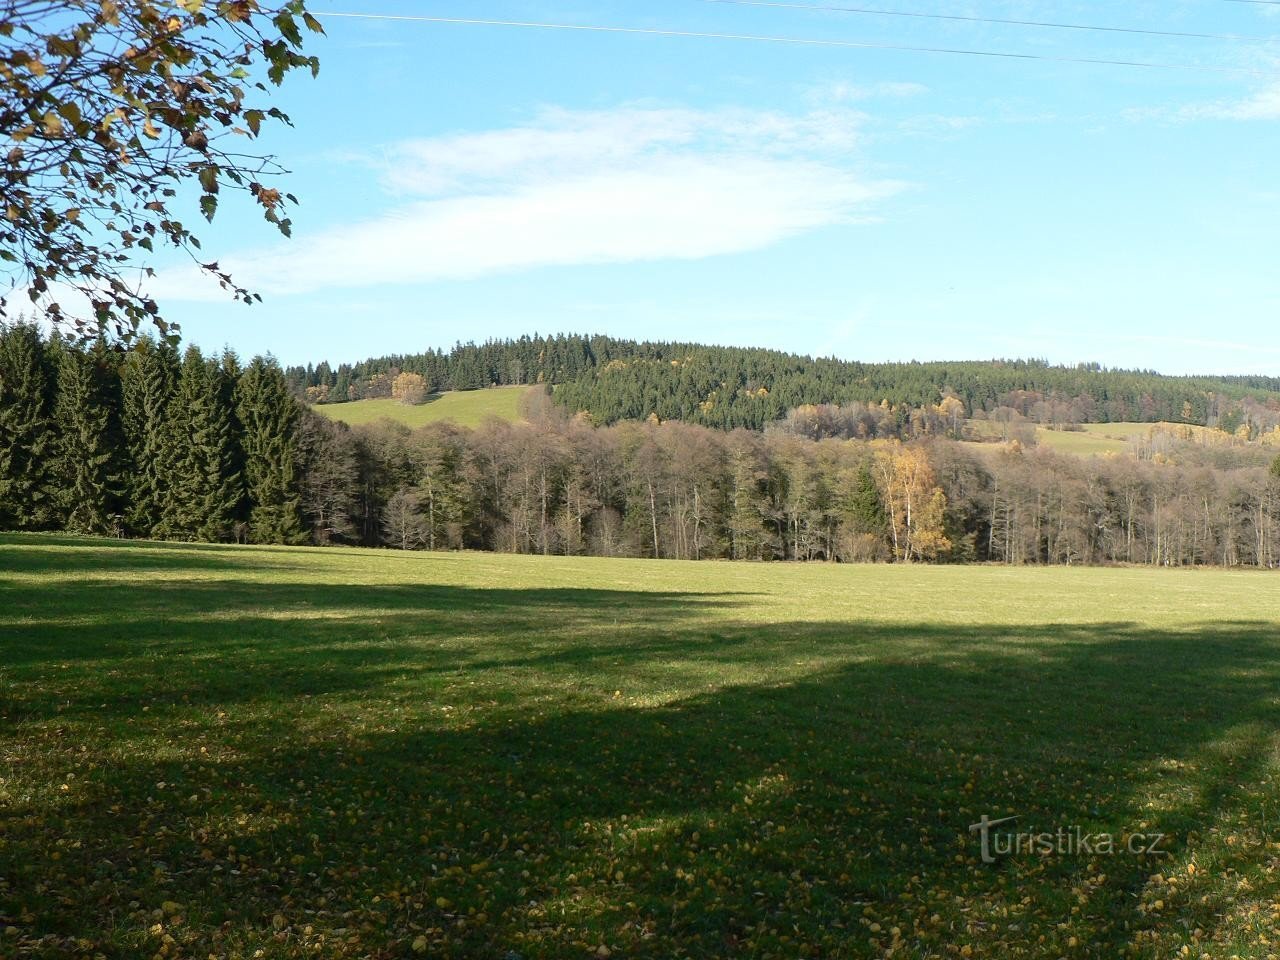 Onen Svět, meadows north of the settlement